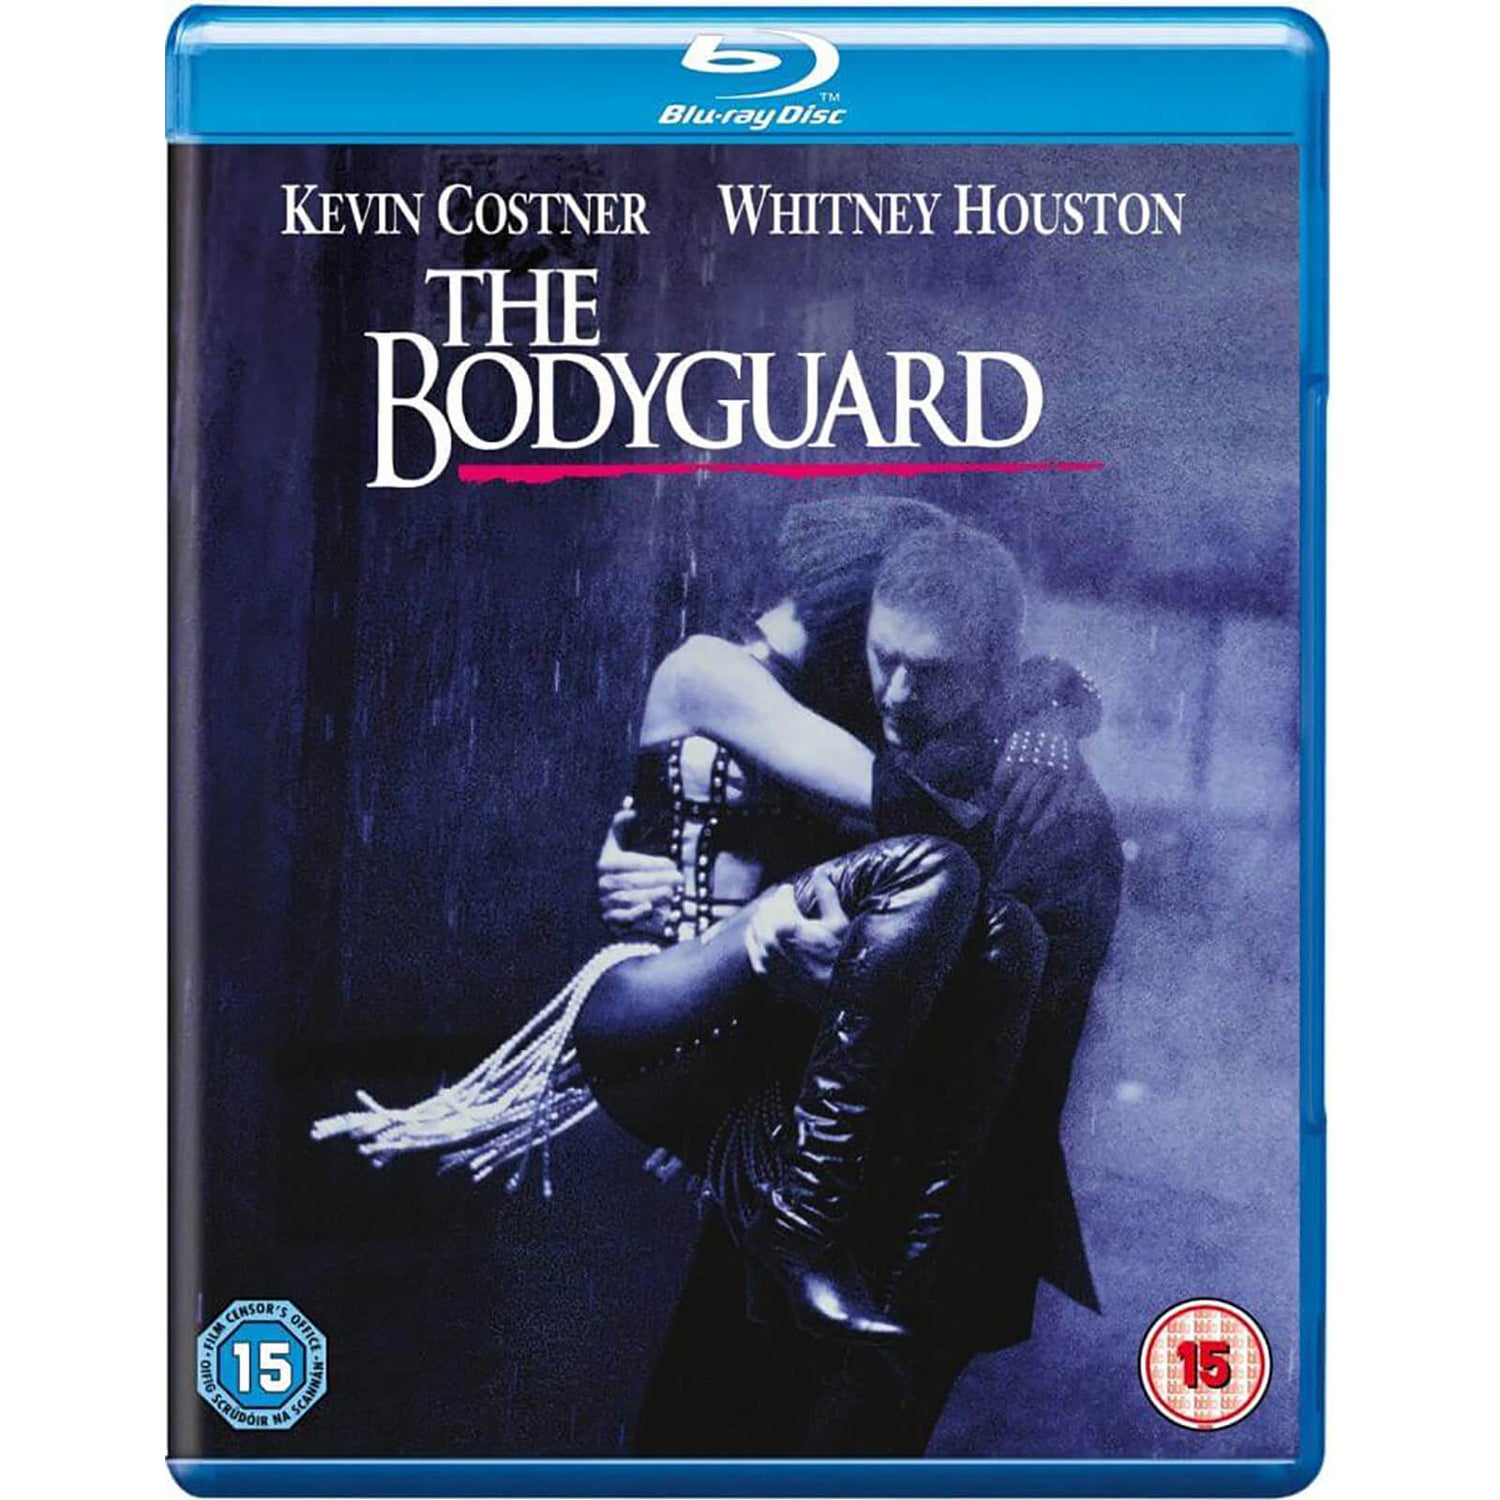 The Bodyguard (Single Disc)